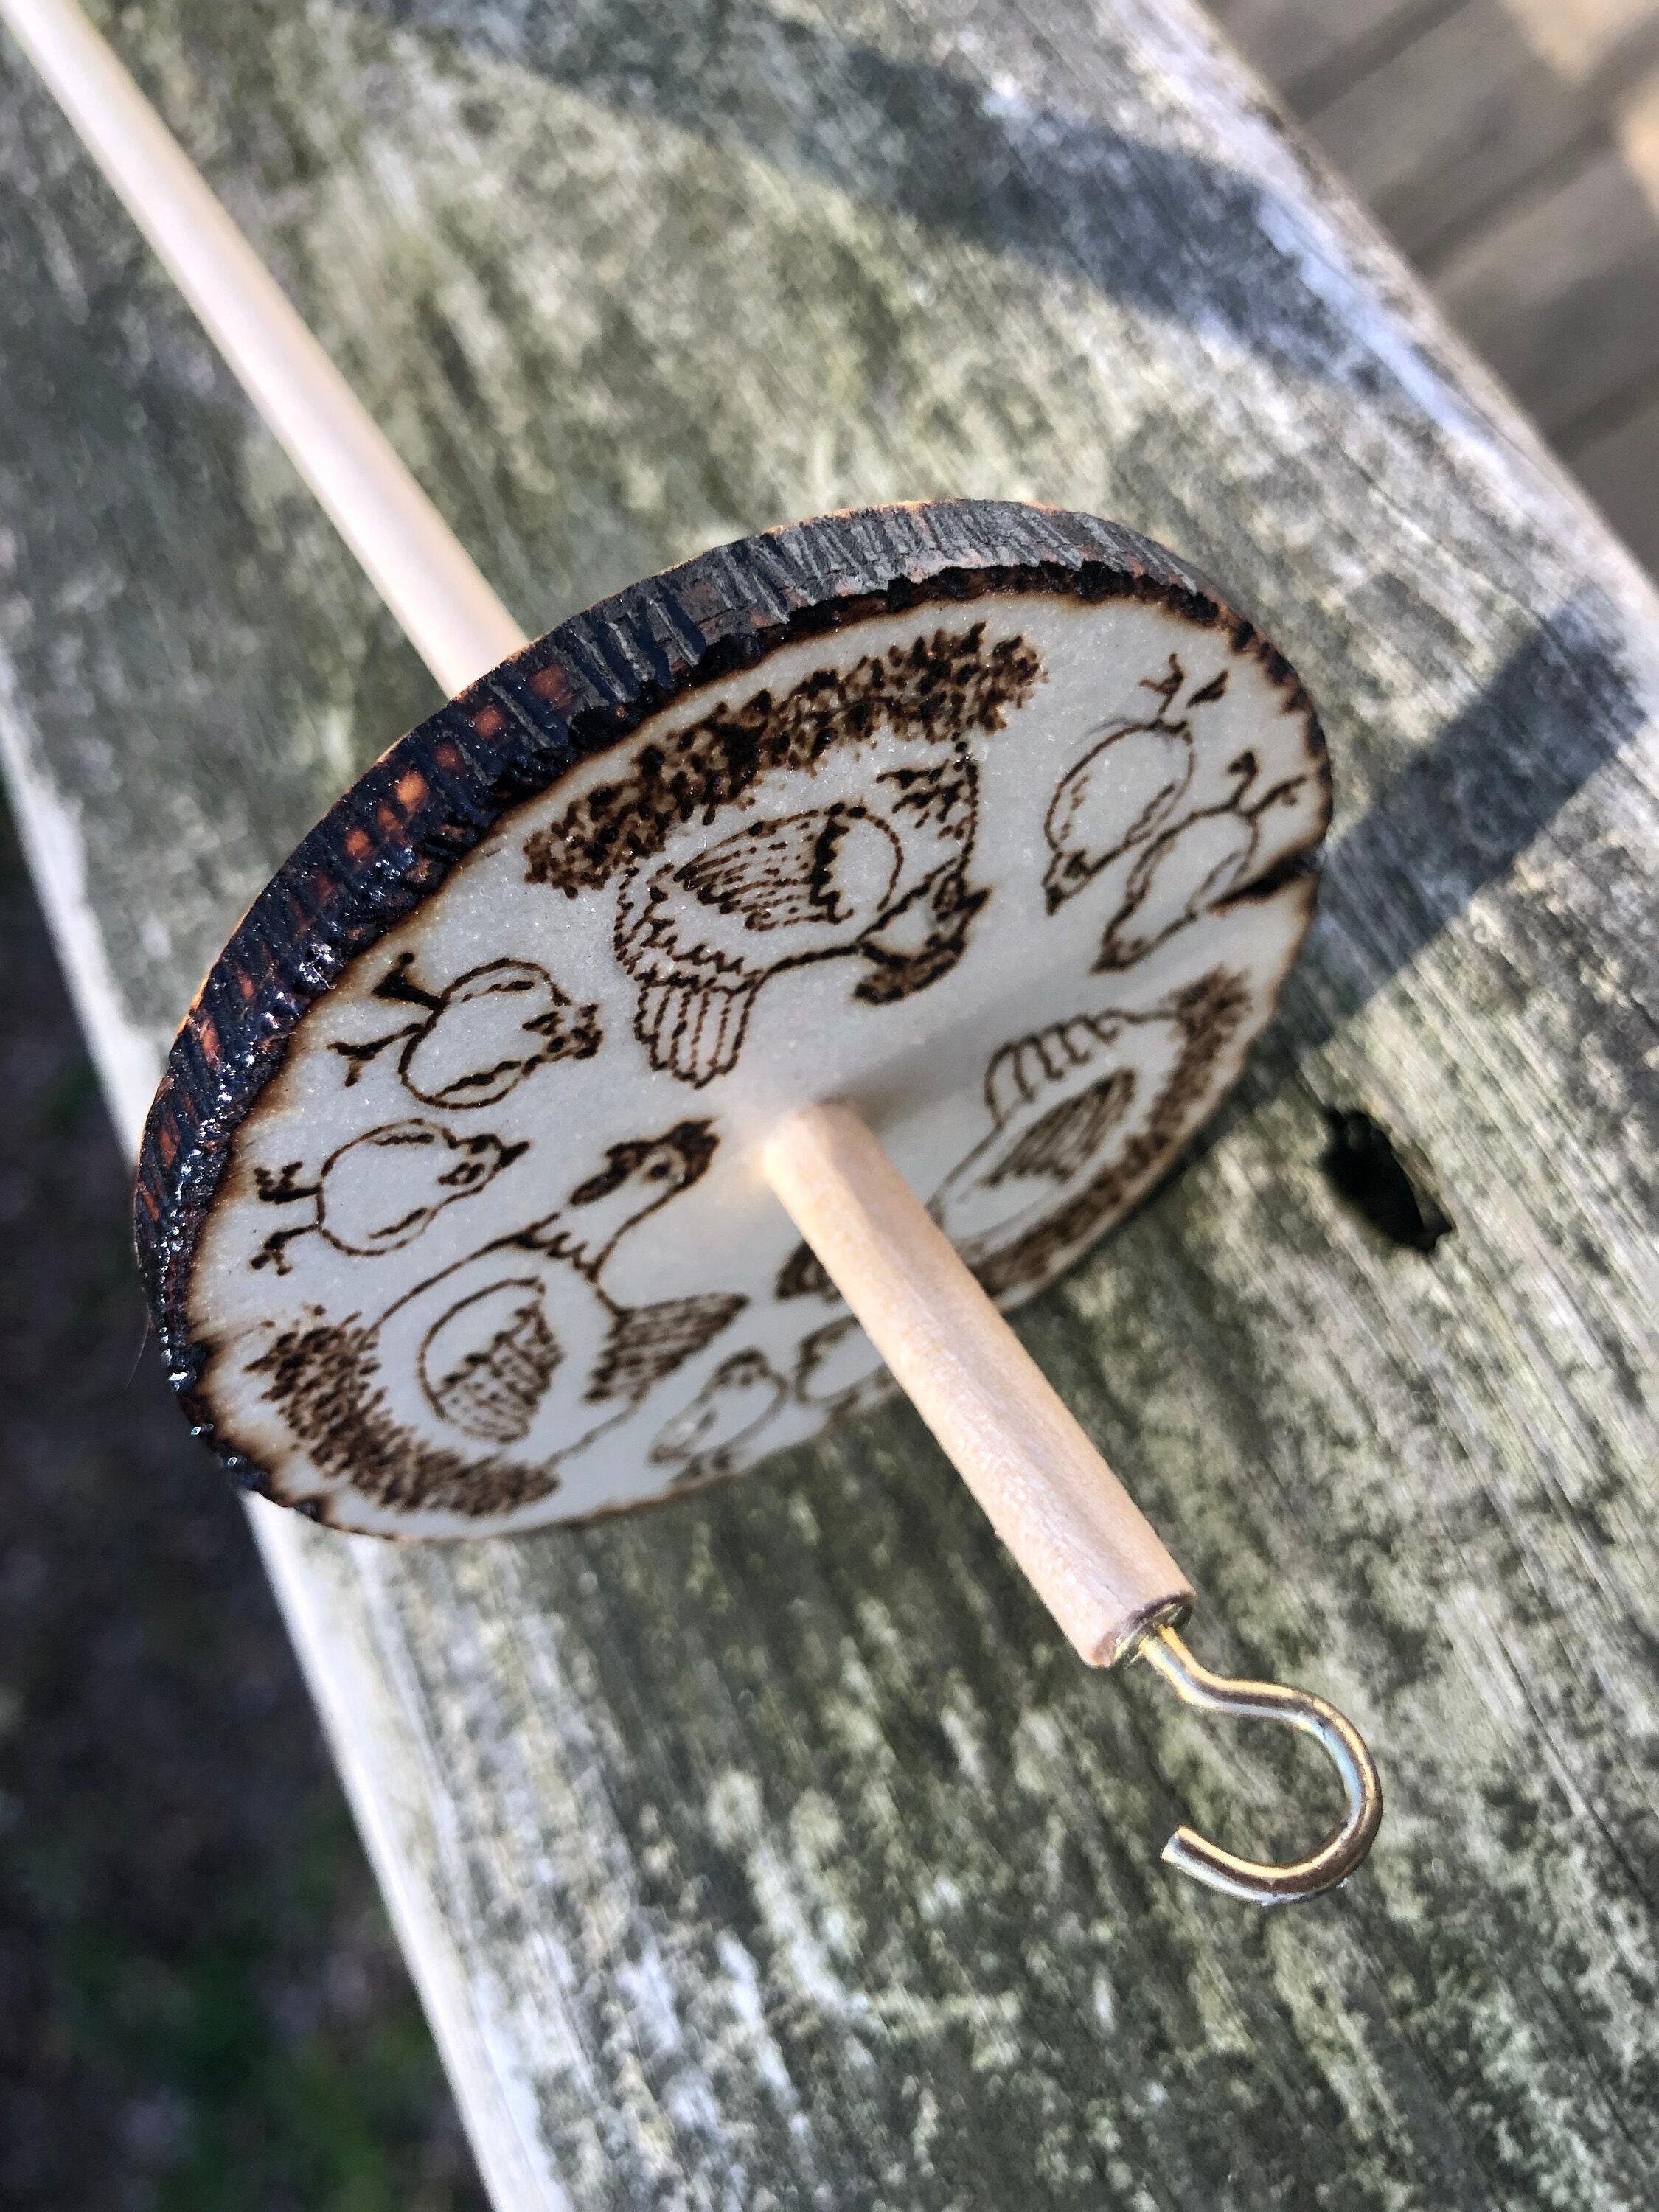 Handmade Supplies :: Sewing & Fiber :: Fiber Art Tools :: Drop Spindle,  Wooden Drop Spindle, Top Whorl Drop Spindle, Fiber art tool, Yarn Spinning,  .75 oz., Roving, Handcrafted, One of a Kind